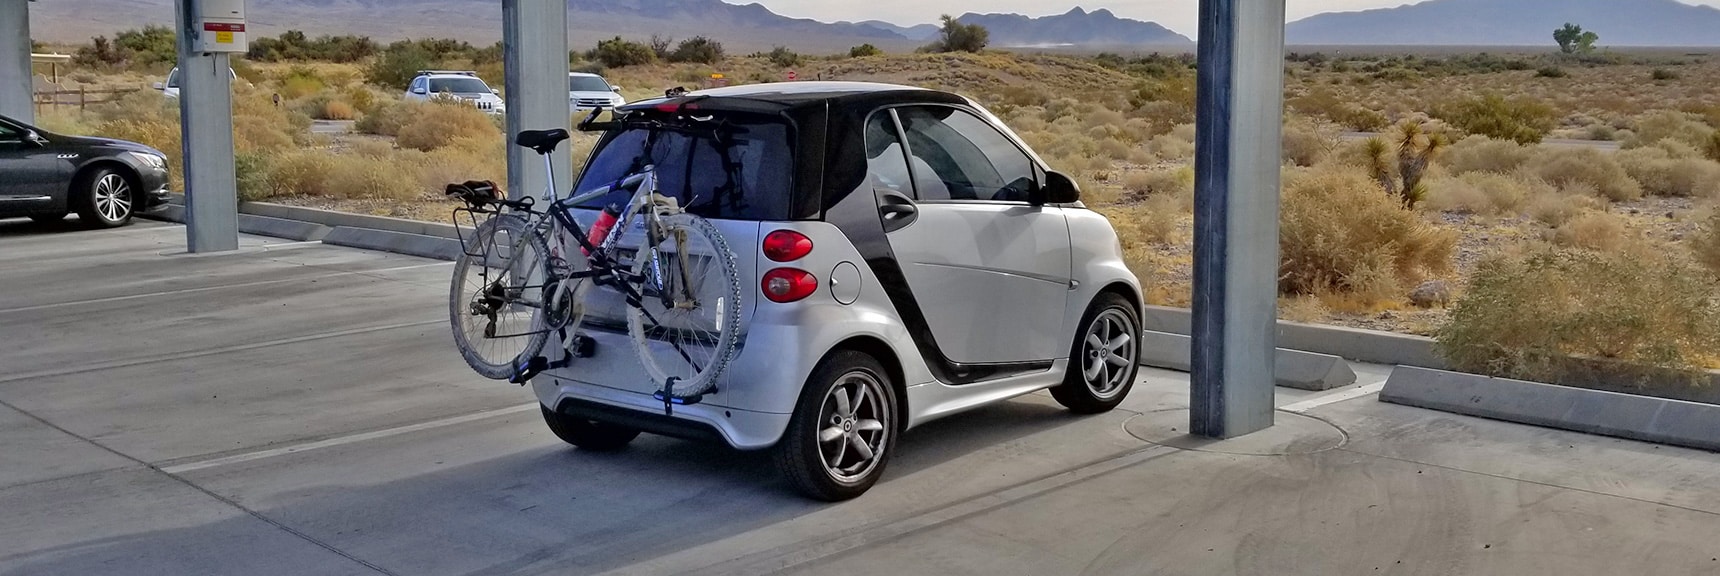 Mountain Bike Fitting Snugly on Smart Car, Arrival at Desert National Wildlife Refuge, Sheep Range, Nevada | Smart Car Bike Rack and Mountain Bike Test, Sheep Range, Nevada